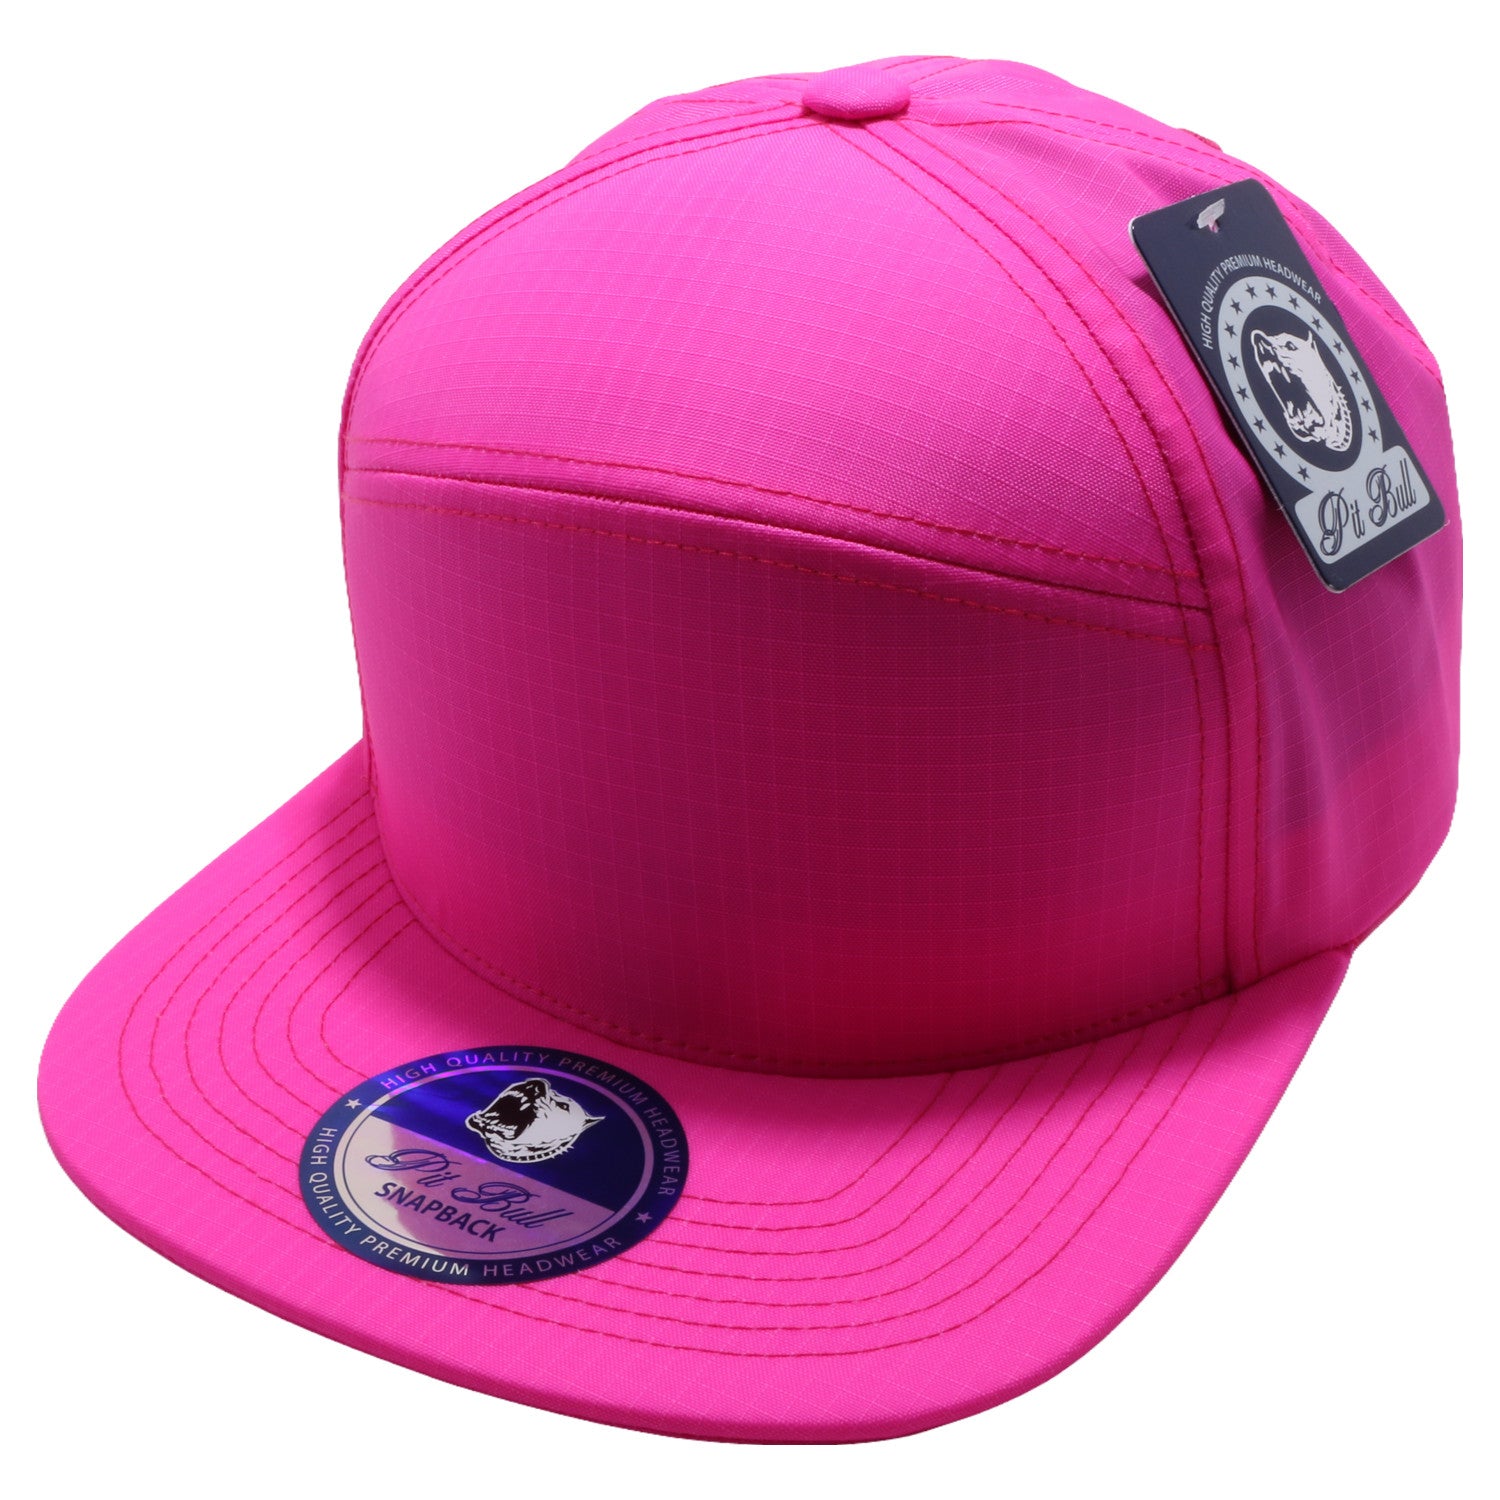 Oxford Wholesale CHOICE Pit Bull Hats Snapback [Neon CAP, – Hybrid Pink]